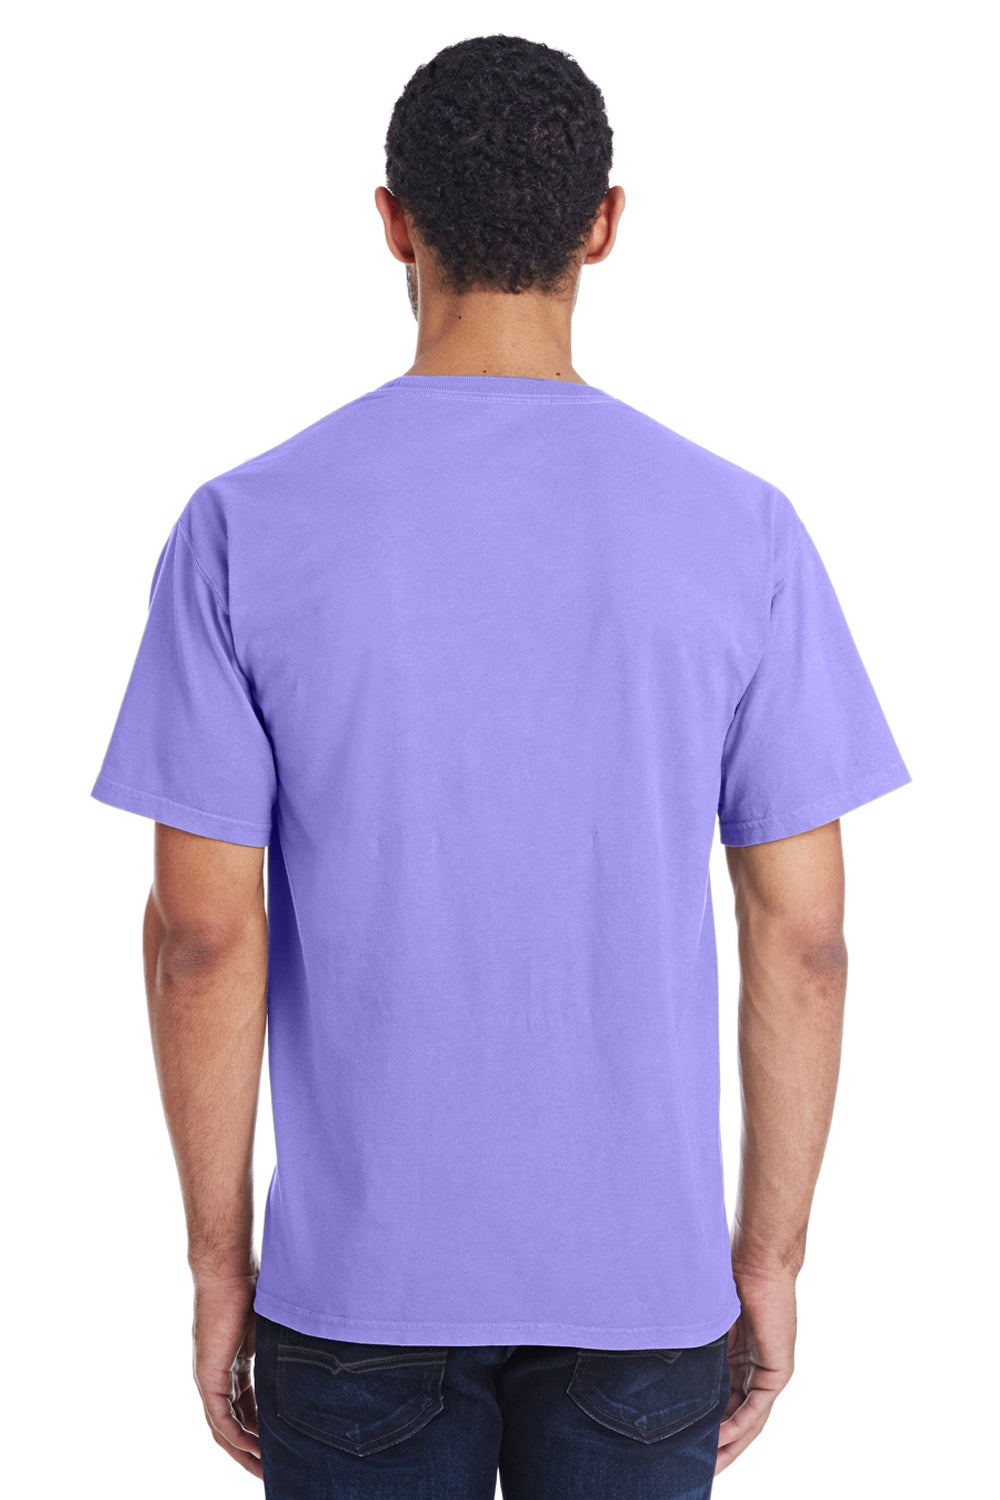 ComfortWash by Hanes GDH100 Short Sleeve Crewneck T-Shirt Lavender Purple Back